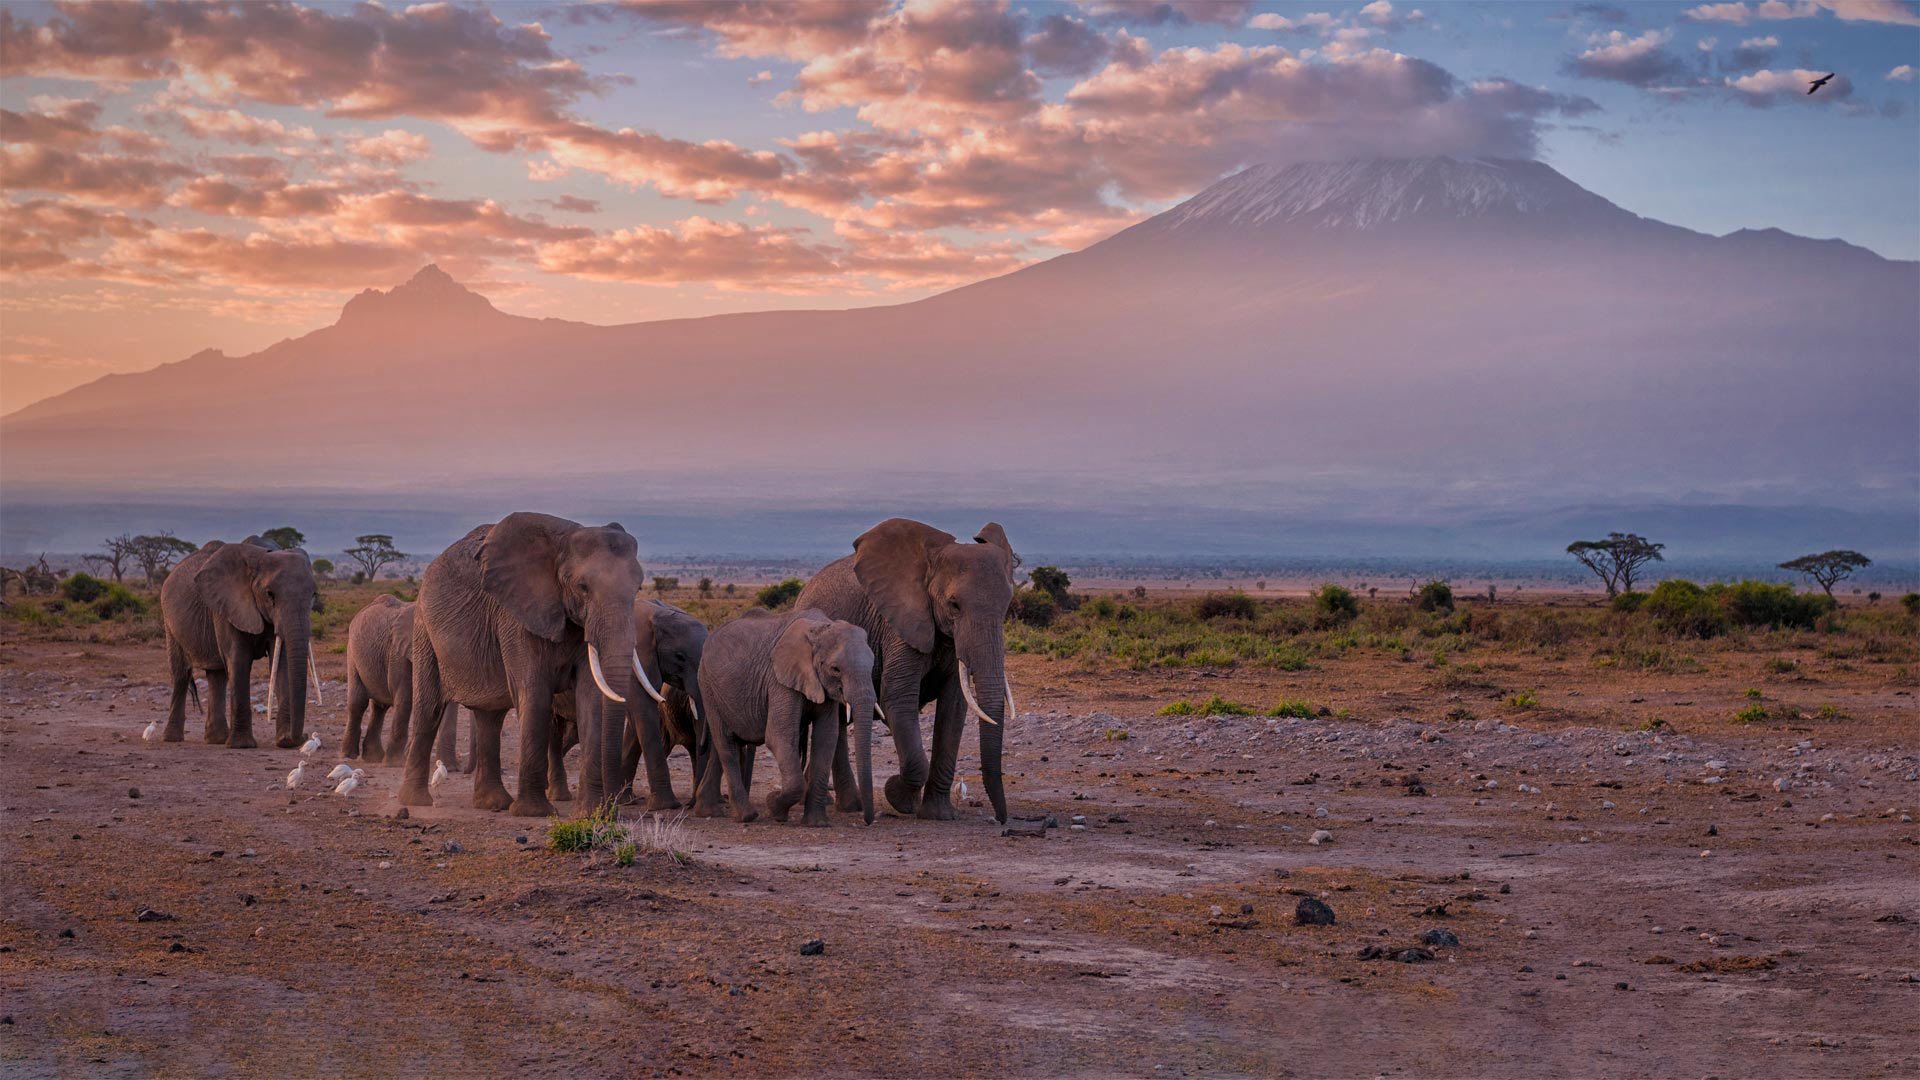 Elephants near Mount Kilimanjaro, Amboseli National Park, Kenya - Diana Robinson Photography/Getty Images)